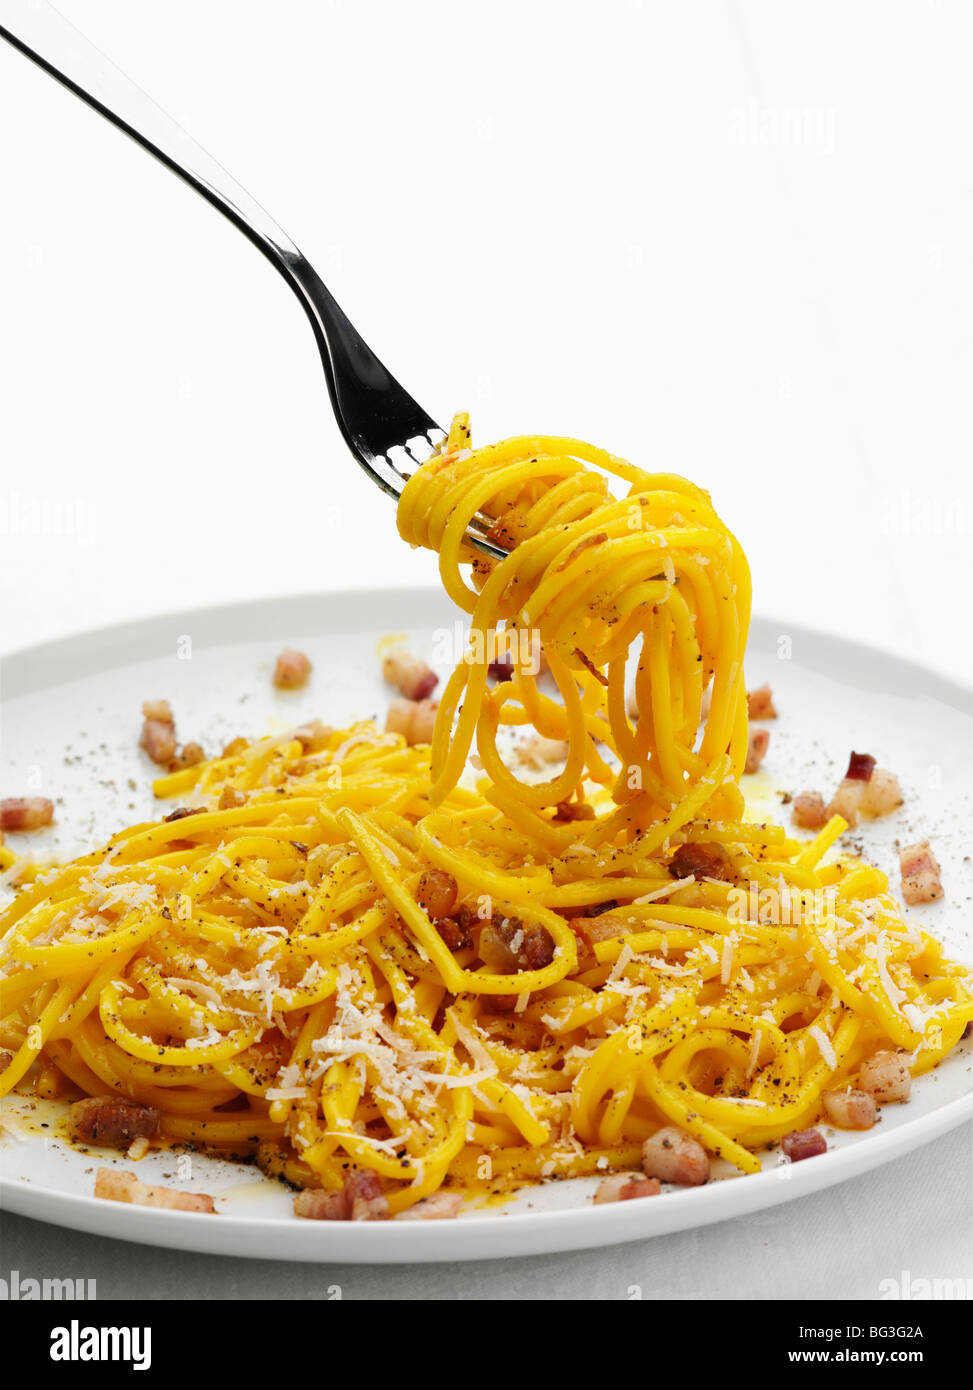 Spaghetti alla carbonara, Italy, Europe Stock Photo